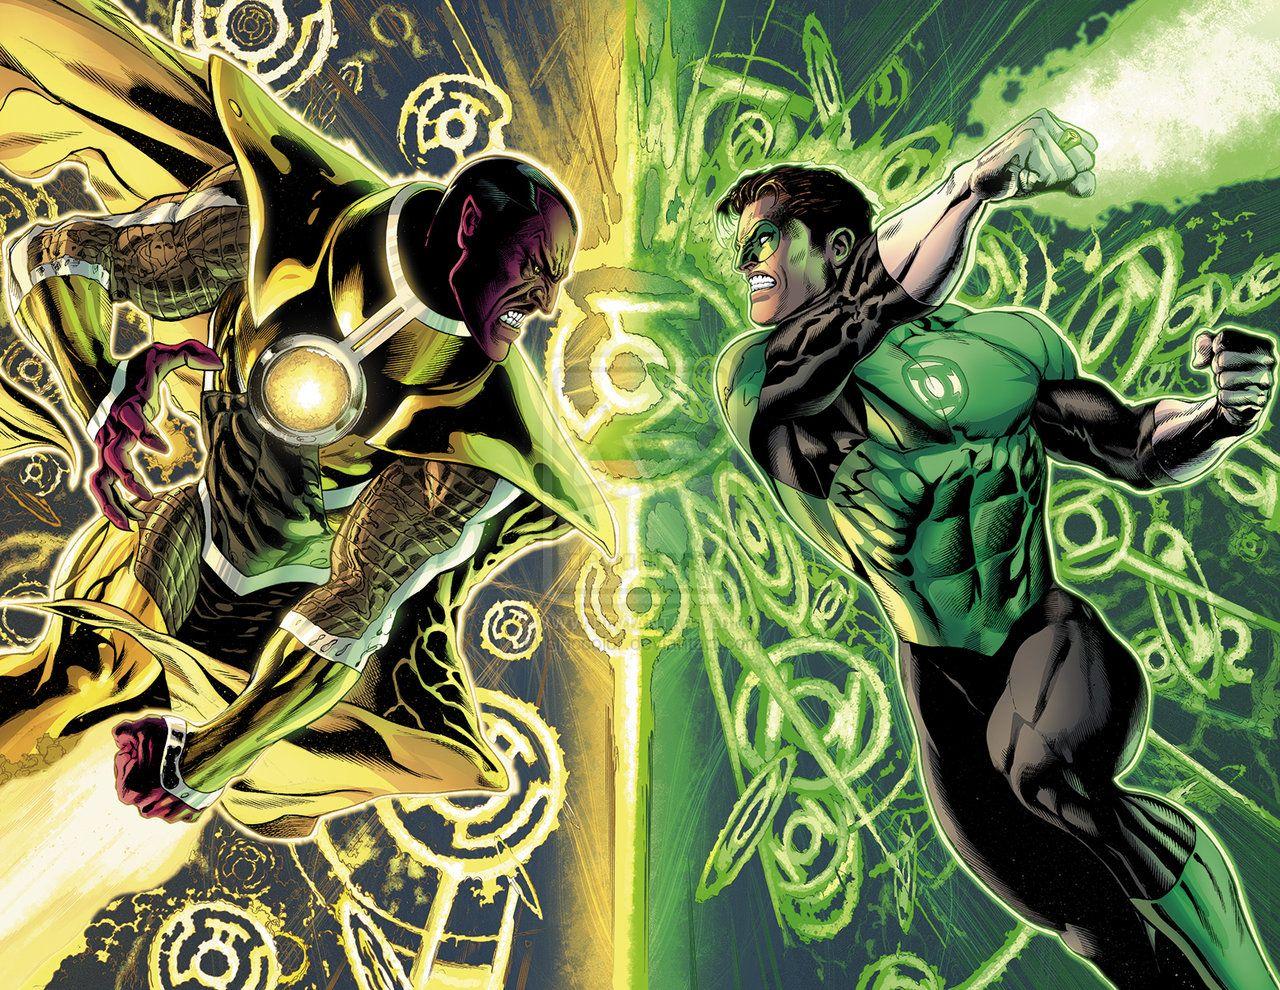 Green Lantern vs Sinestro by Doug Mahnke. Green lantern